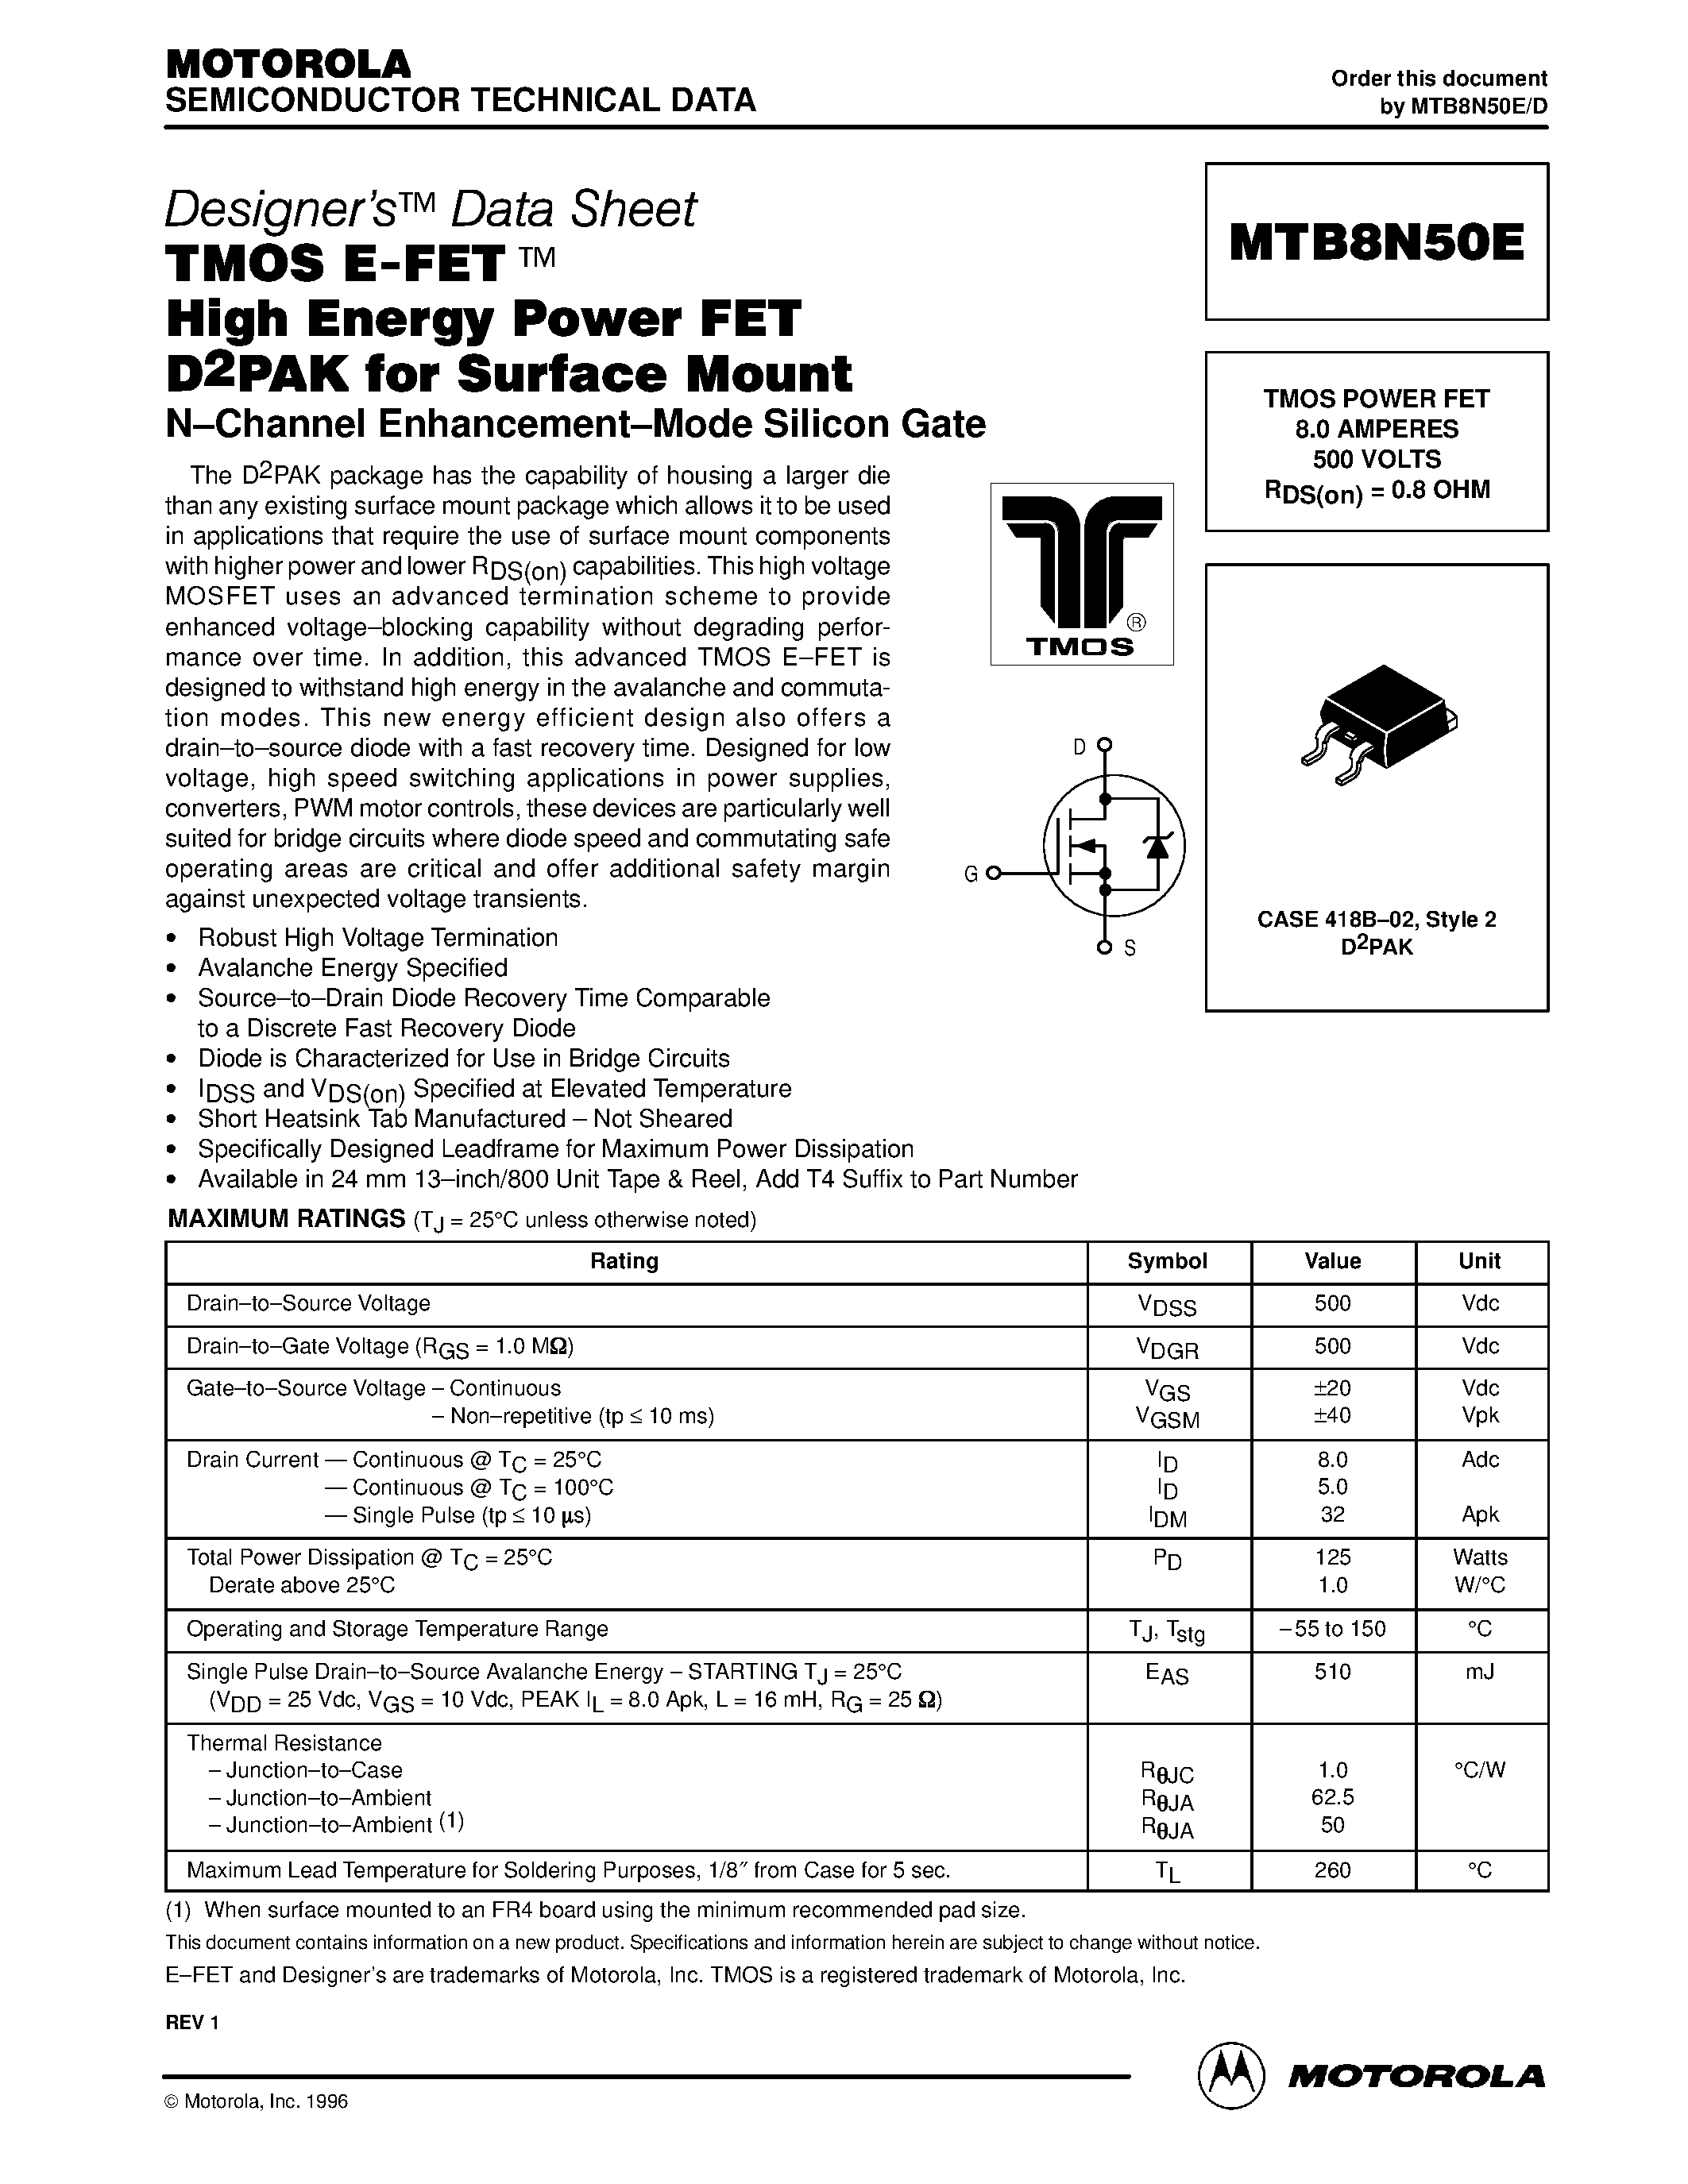 Даташит MTB8N50E - TMOS POWER FET 8.0 AMPERES 500 VOLTS страница 1